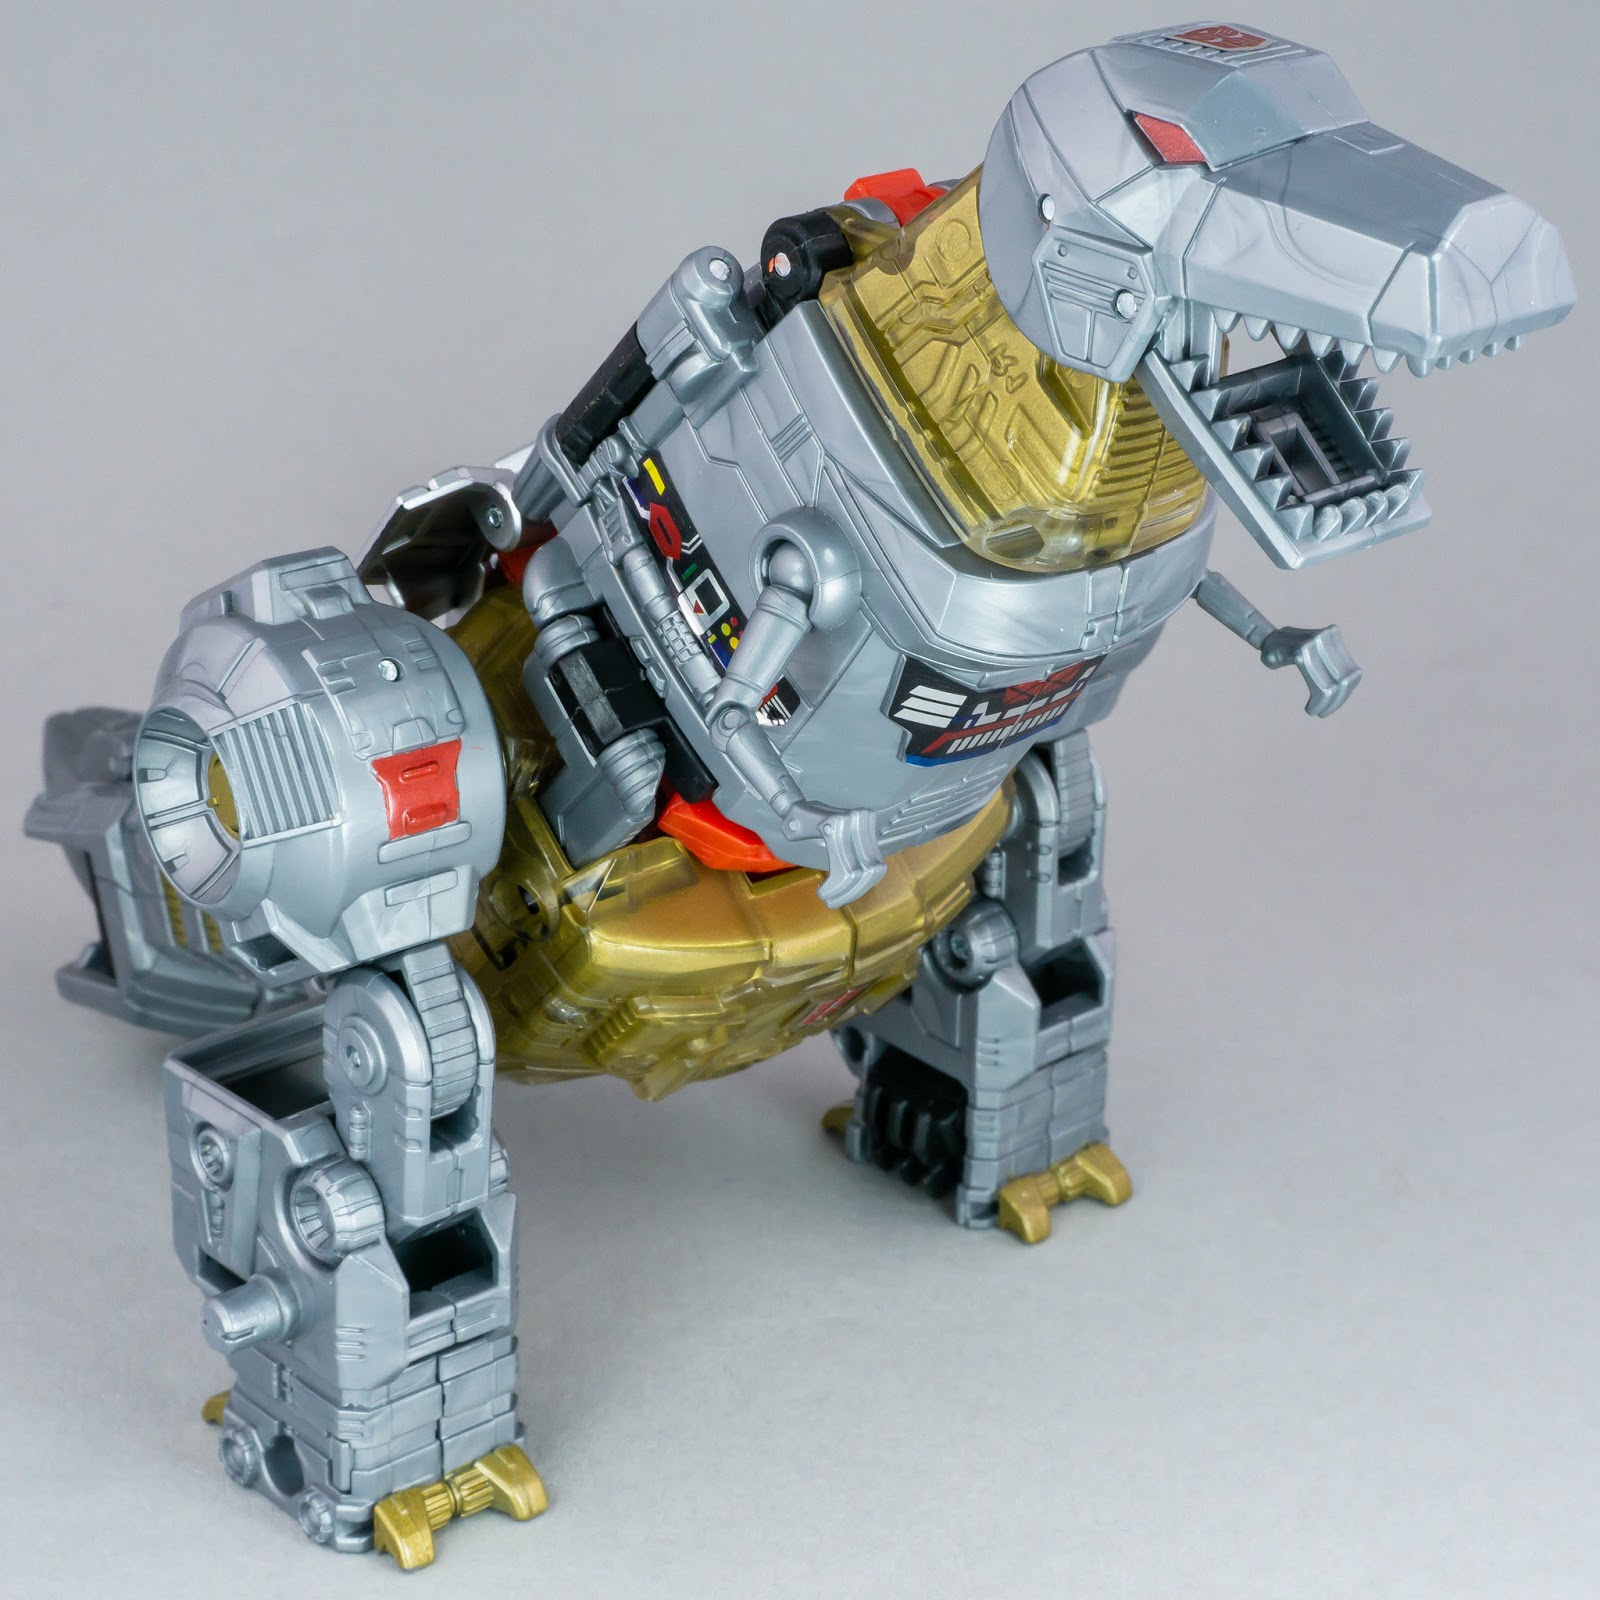 Transformers Power of the Primes Grimlock Tyrannosaurus Rex mode